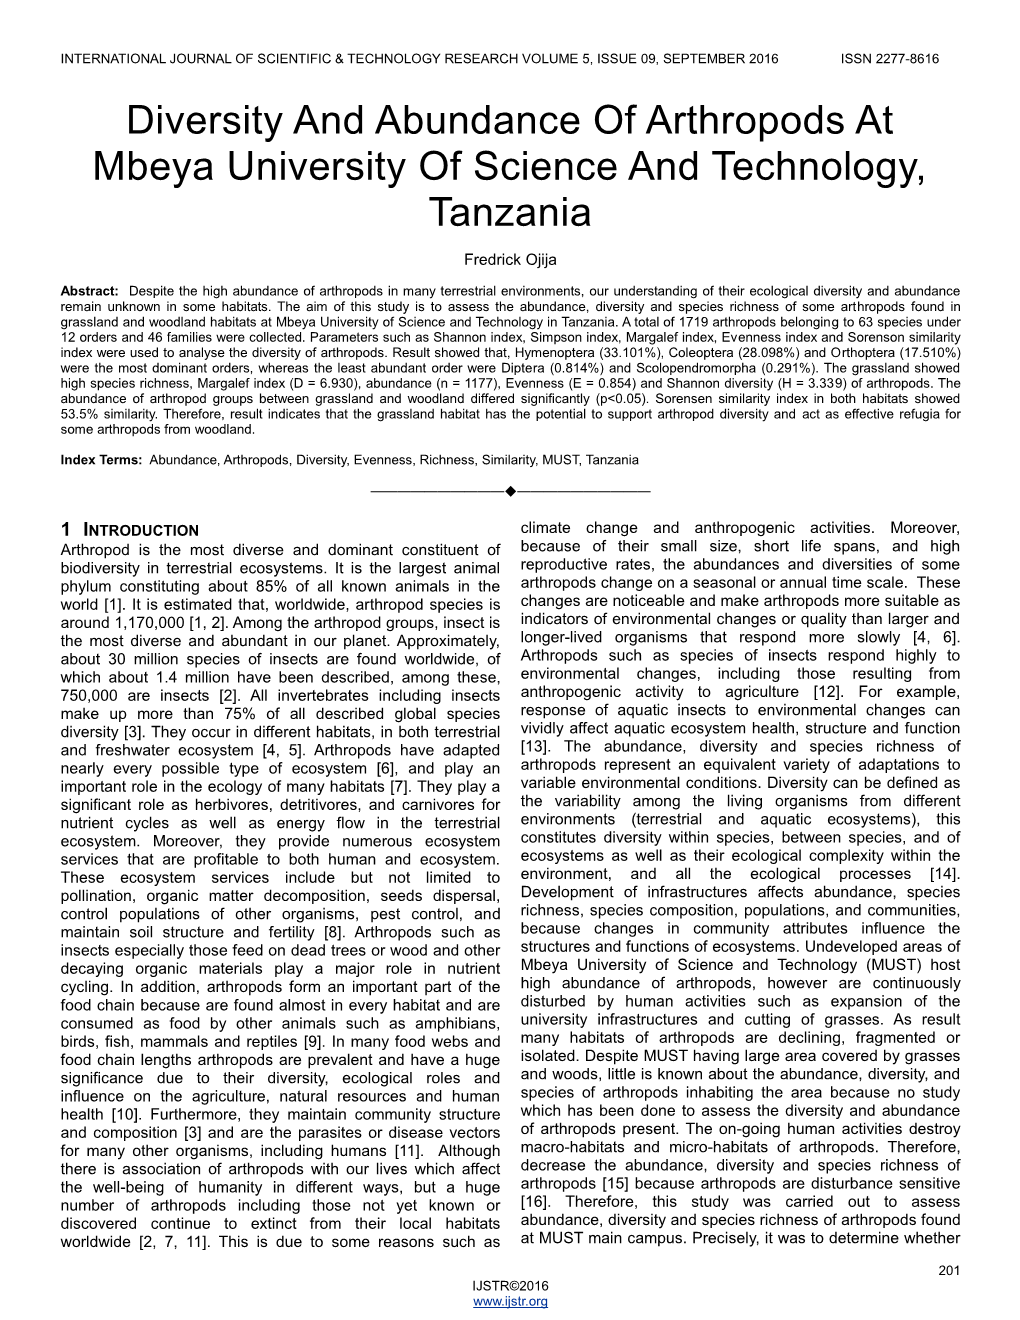 Diversity and Abundance of Arthropods at Mbeya University of Science and Technology, Tanzania